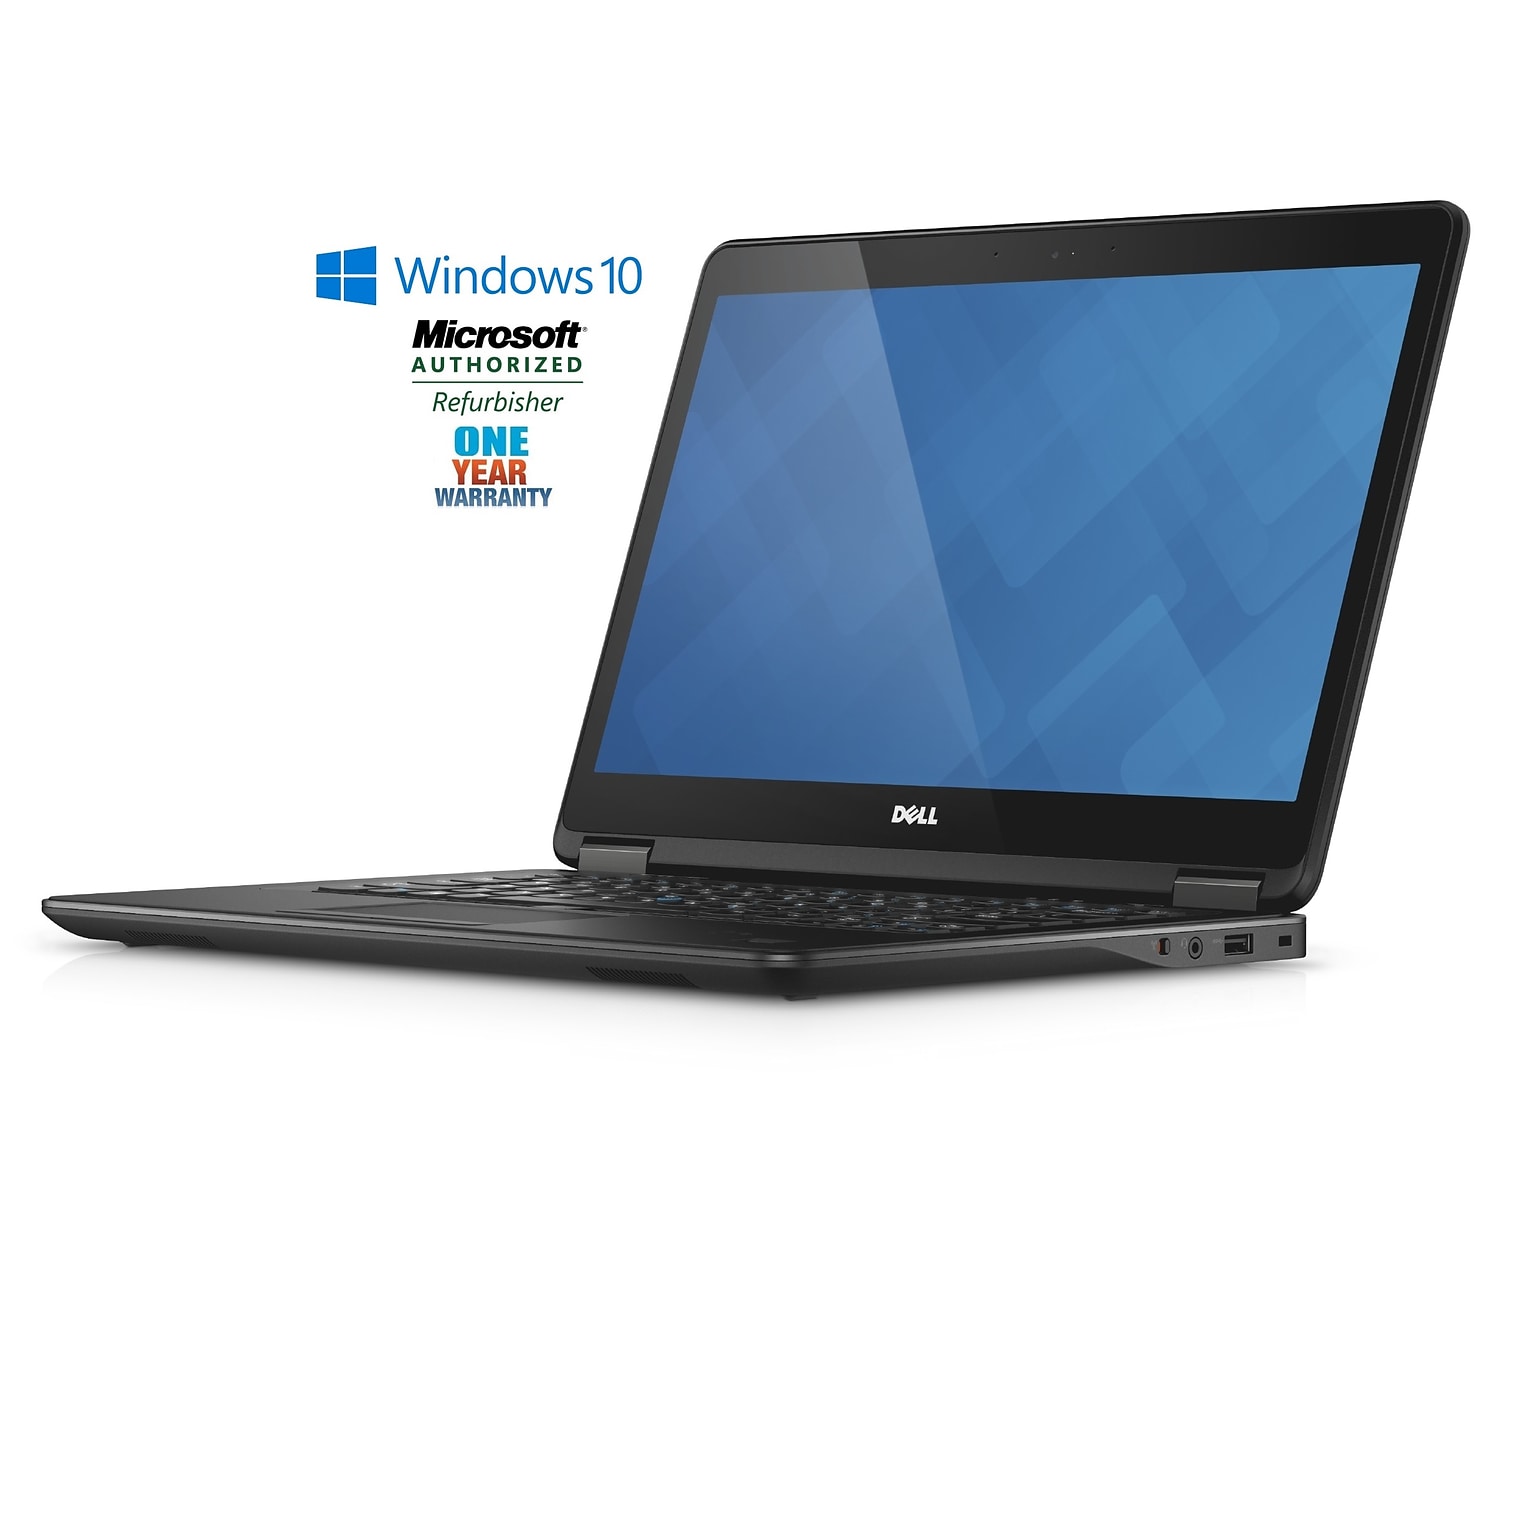 Dell Latitude E6440 Laptop, Intel Core i7-4600M 2.9GHz, 8GB RAM, 500GB Hard Drive, 14 Screen, Windows 10 Pro, Refurbished